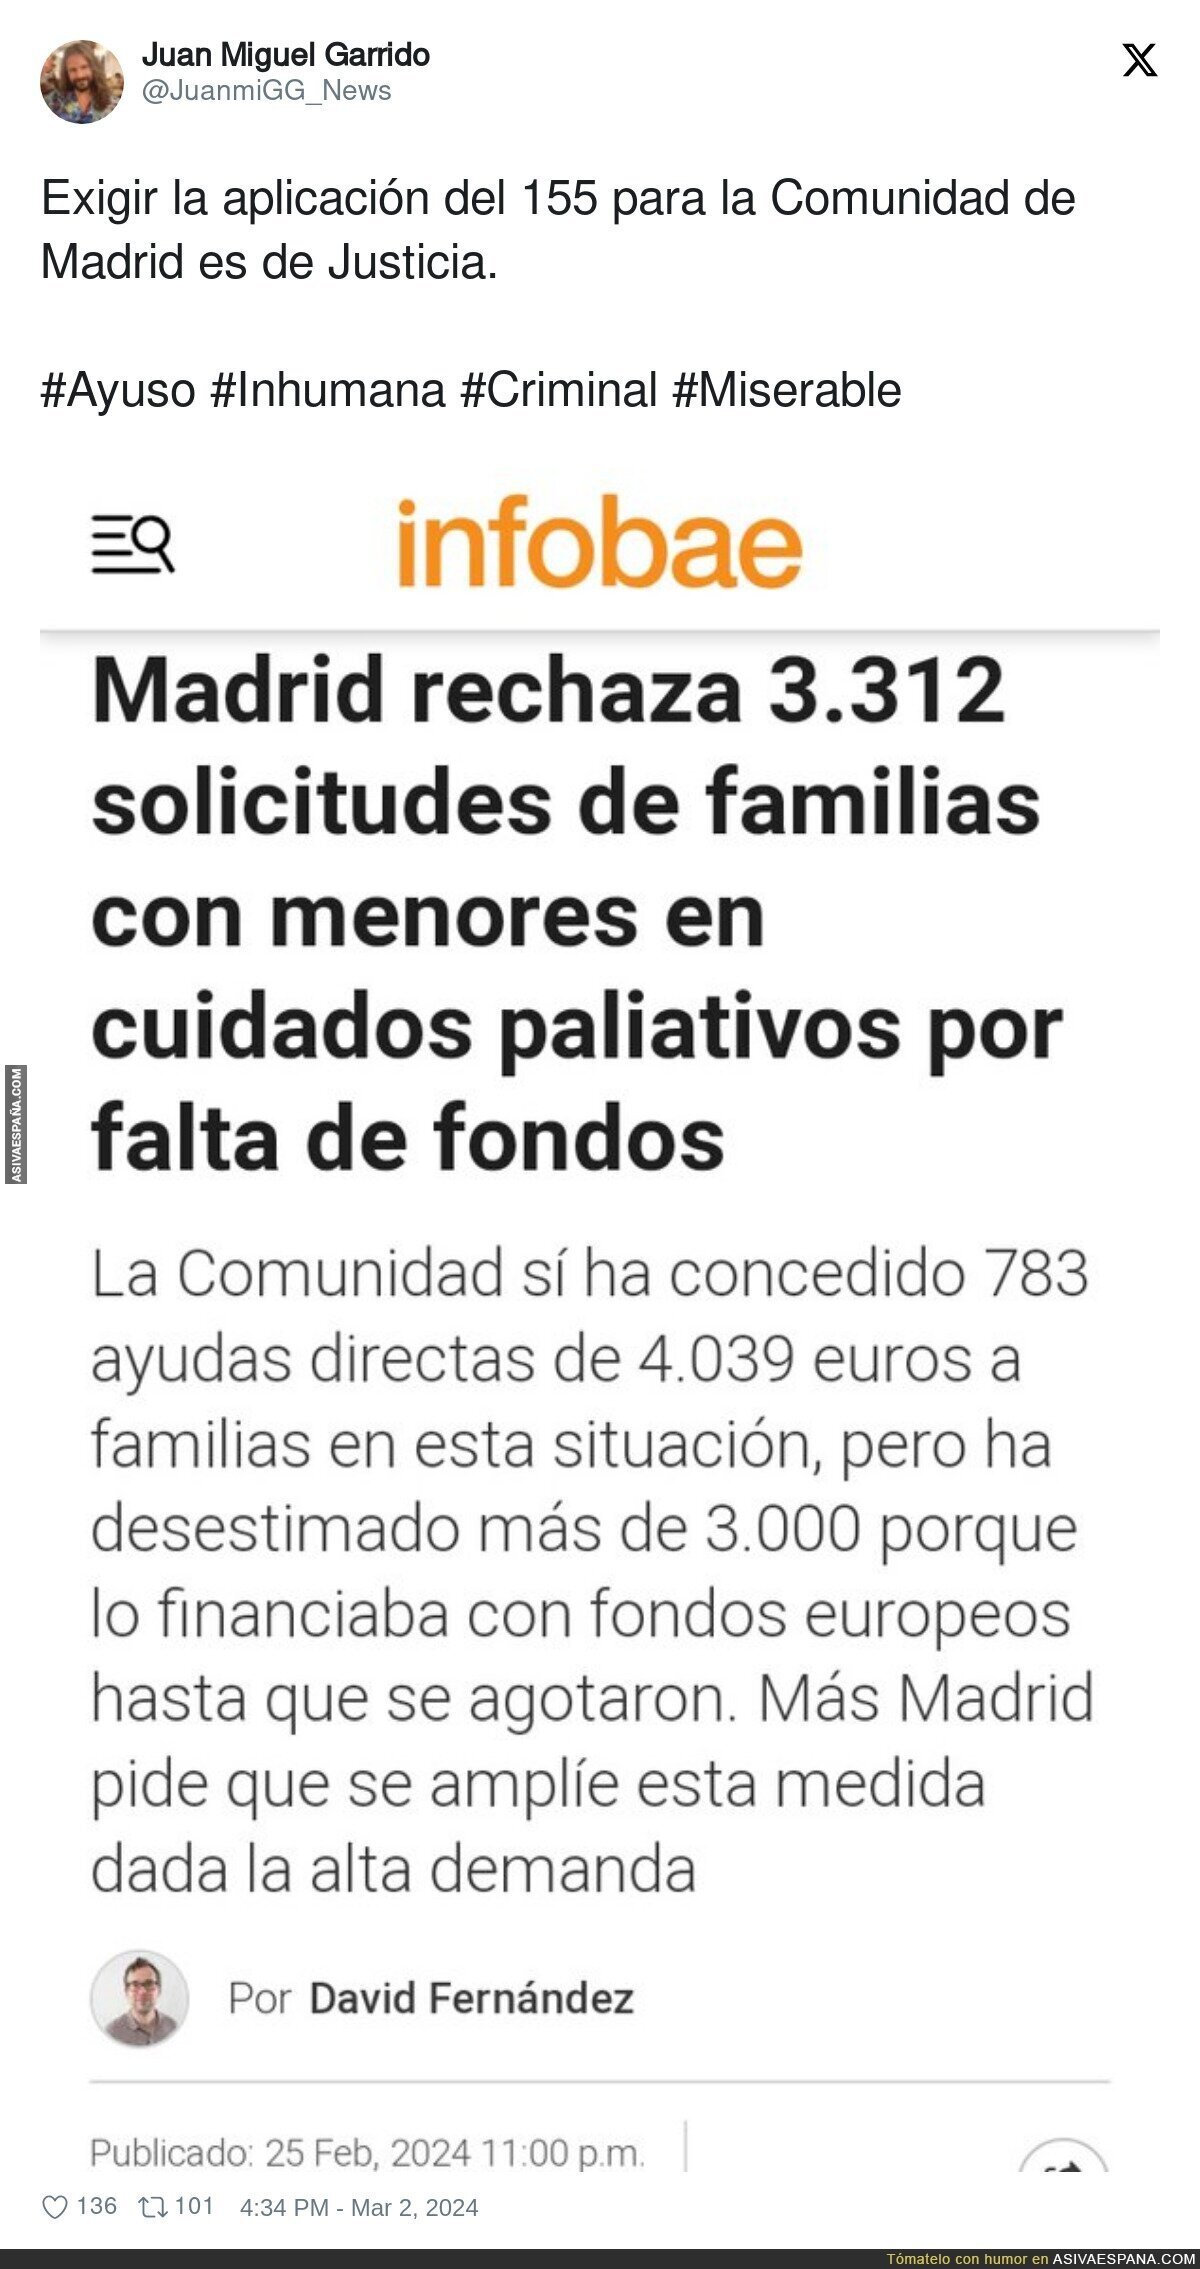 Madrid es un peligro